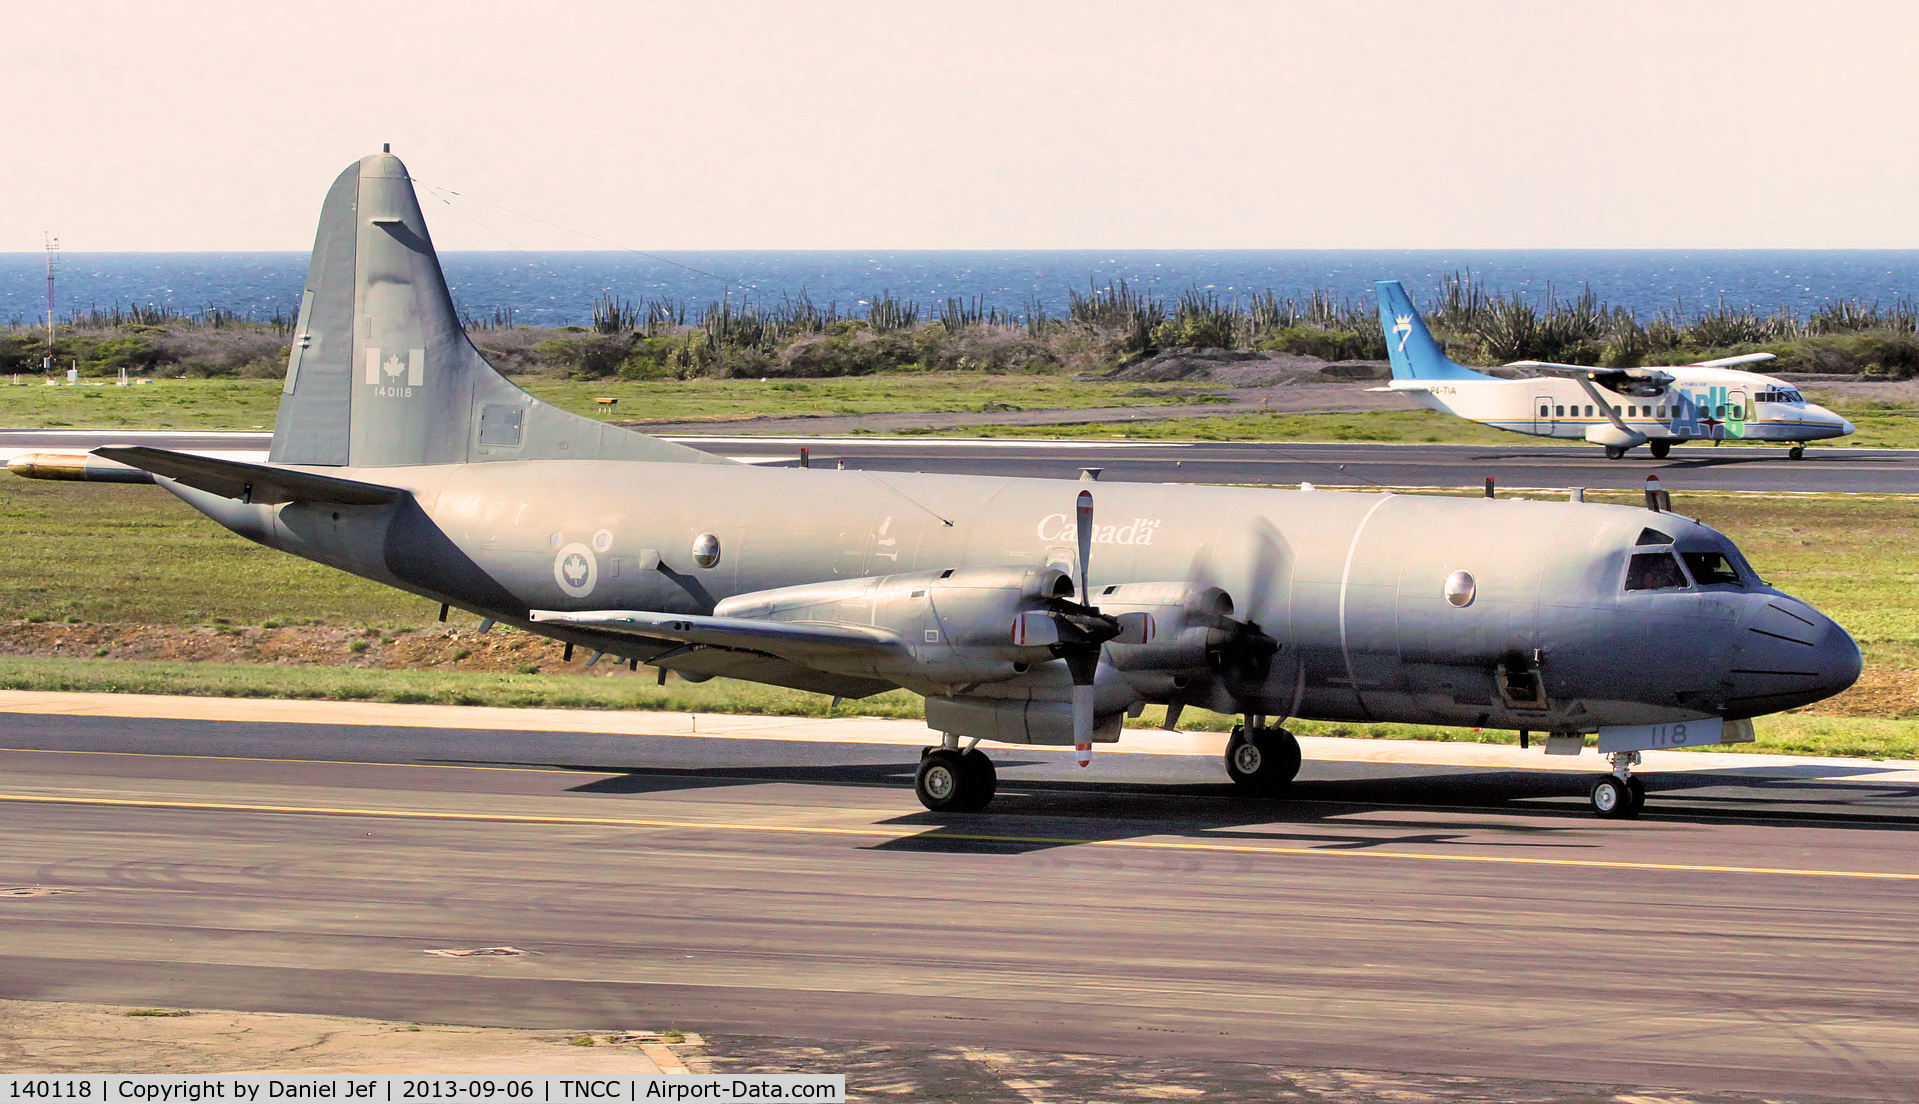 140118, 1981 Lockheed CP-140 Aurora C/N 285B-5725, 140118